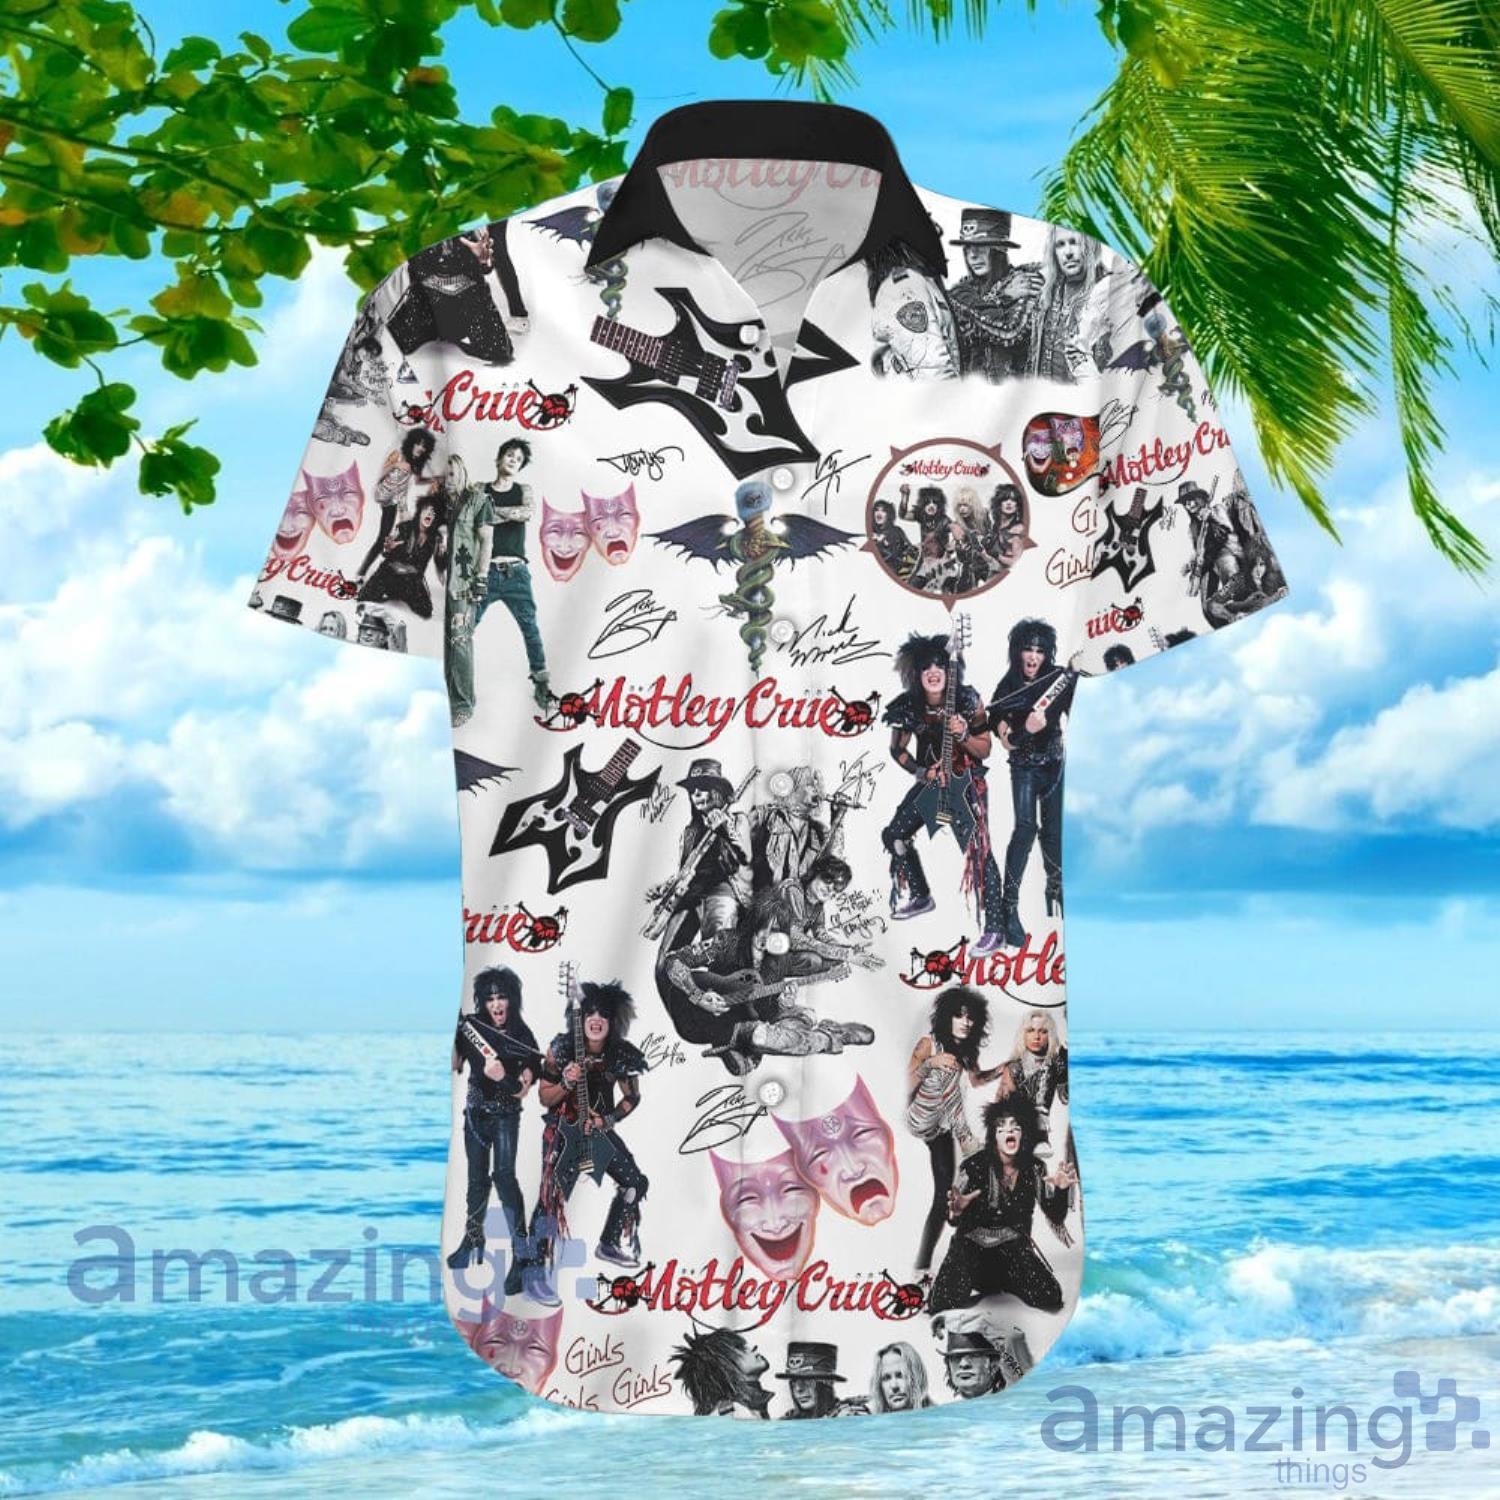 All-over Print Pocket Hawaiian Shirt - Print On Demand